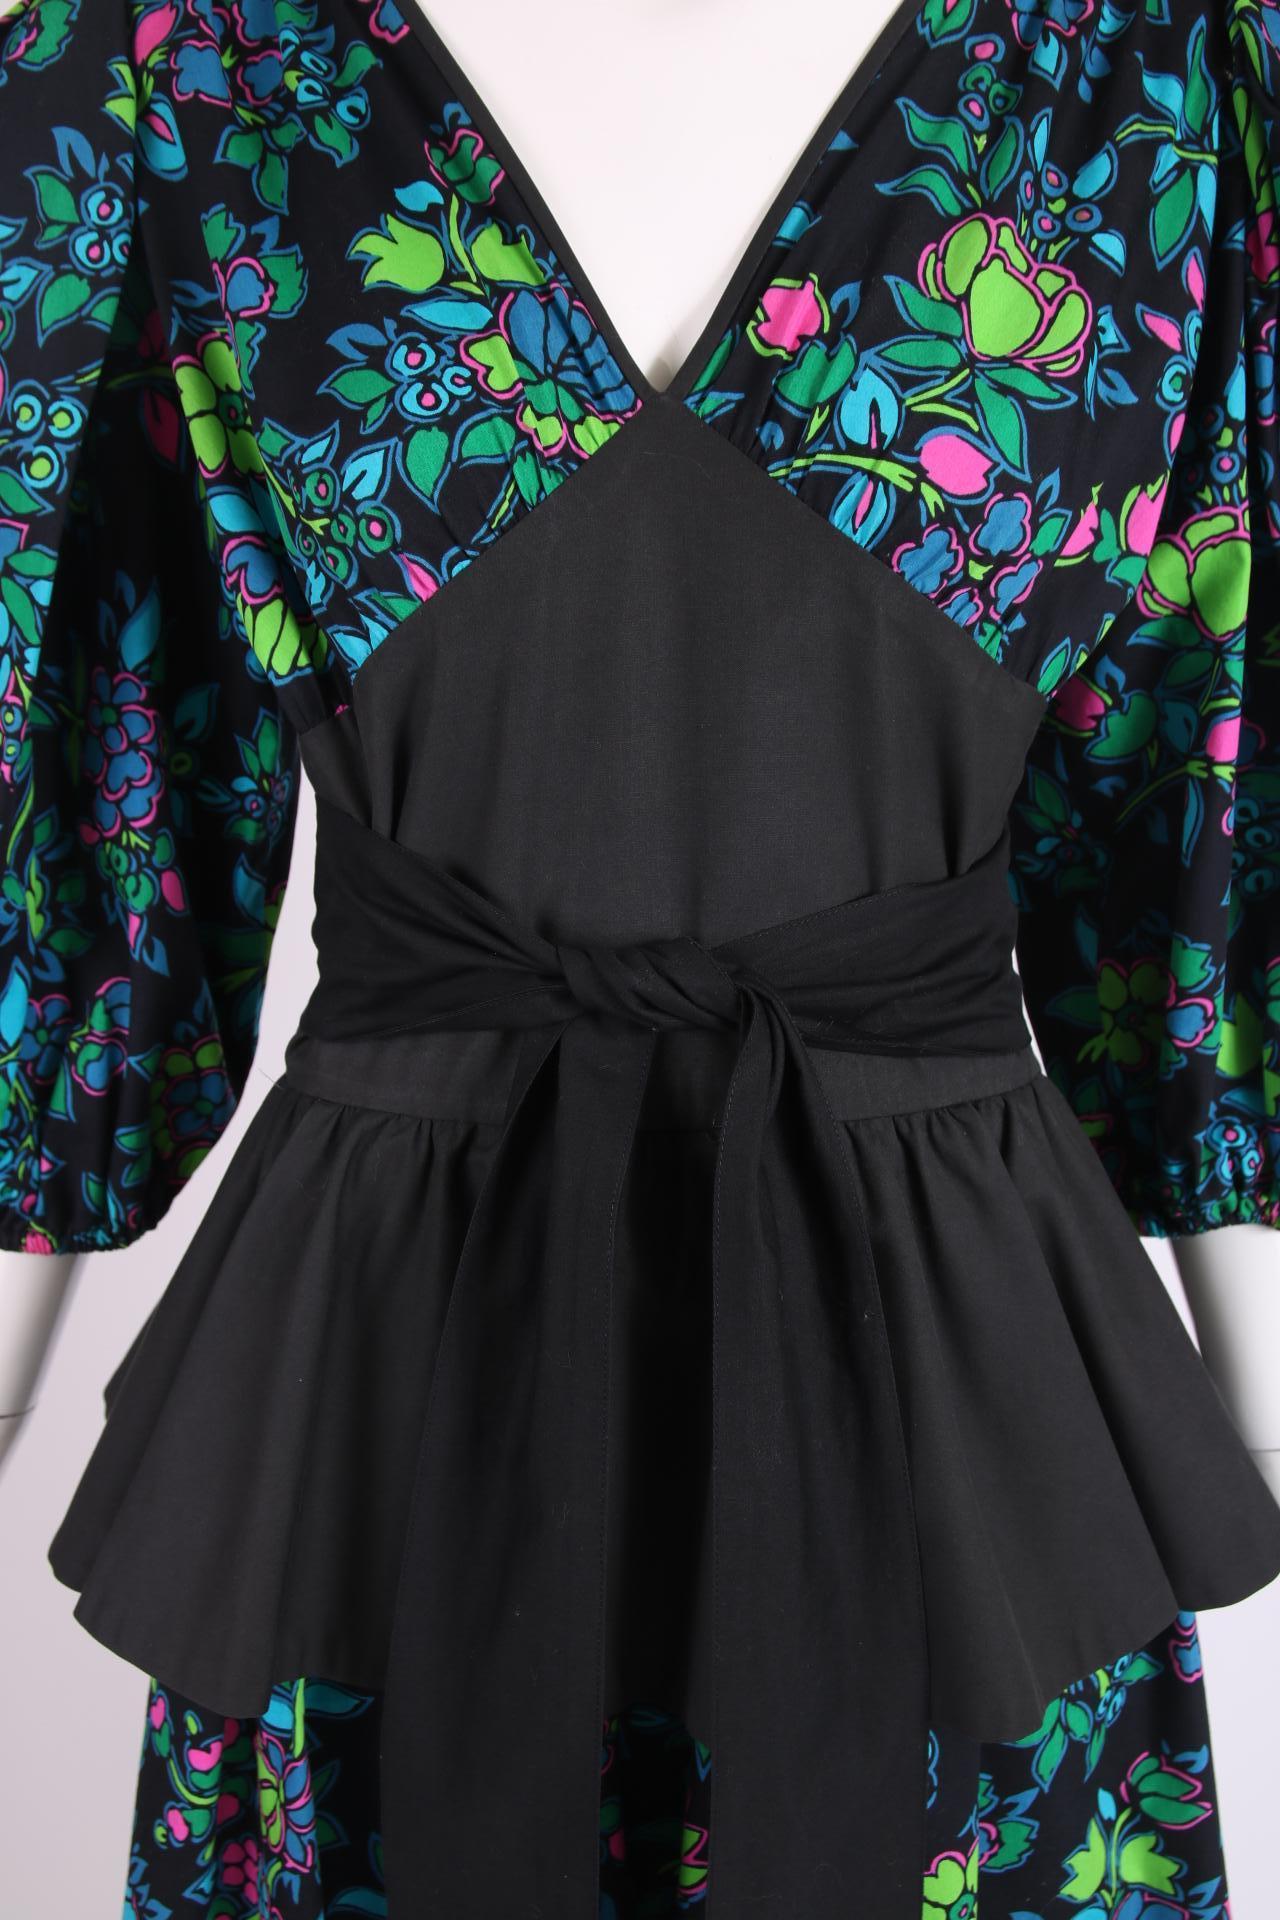 Women's Yves Saint Laurent Floral Print Cotton Day Dress w/Black Peplum & Self Belt